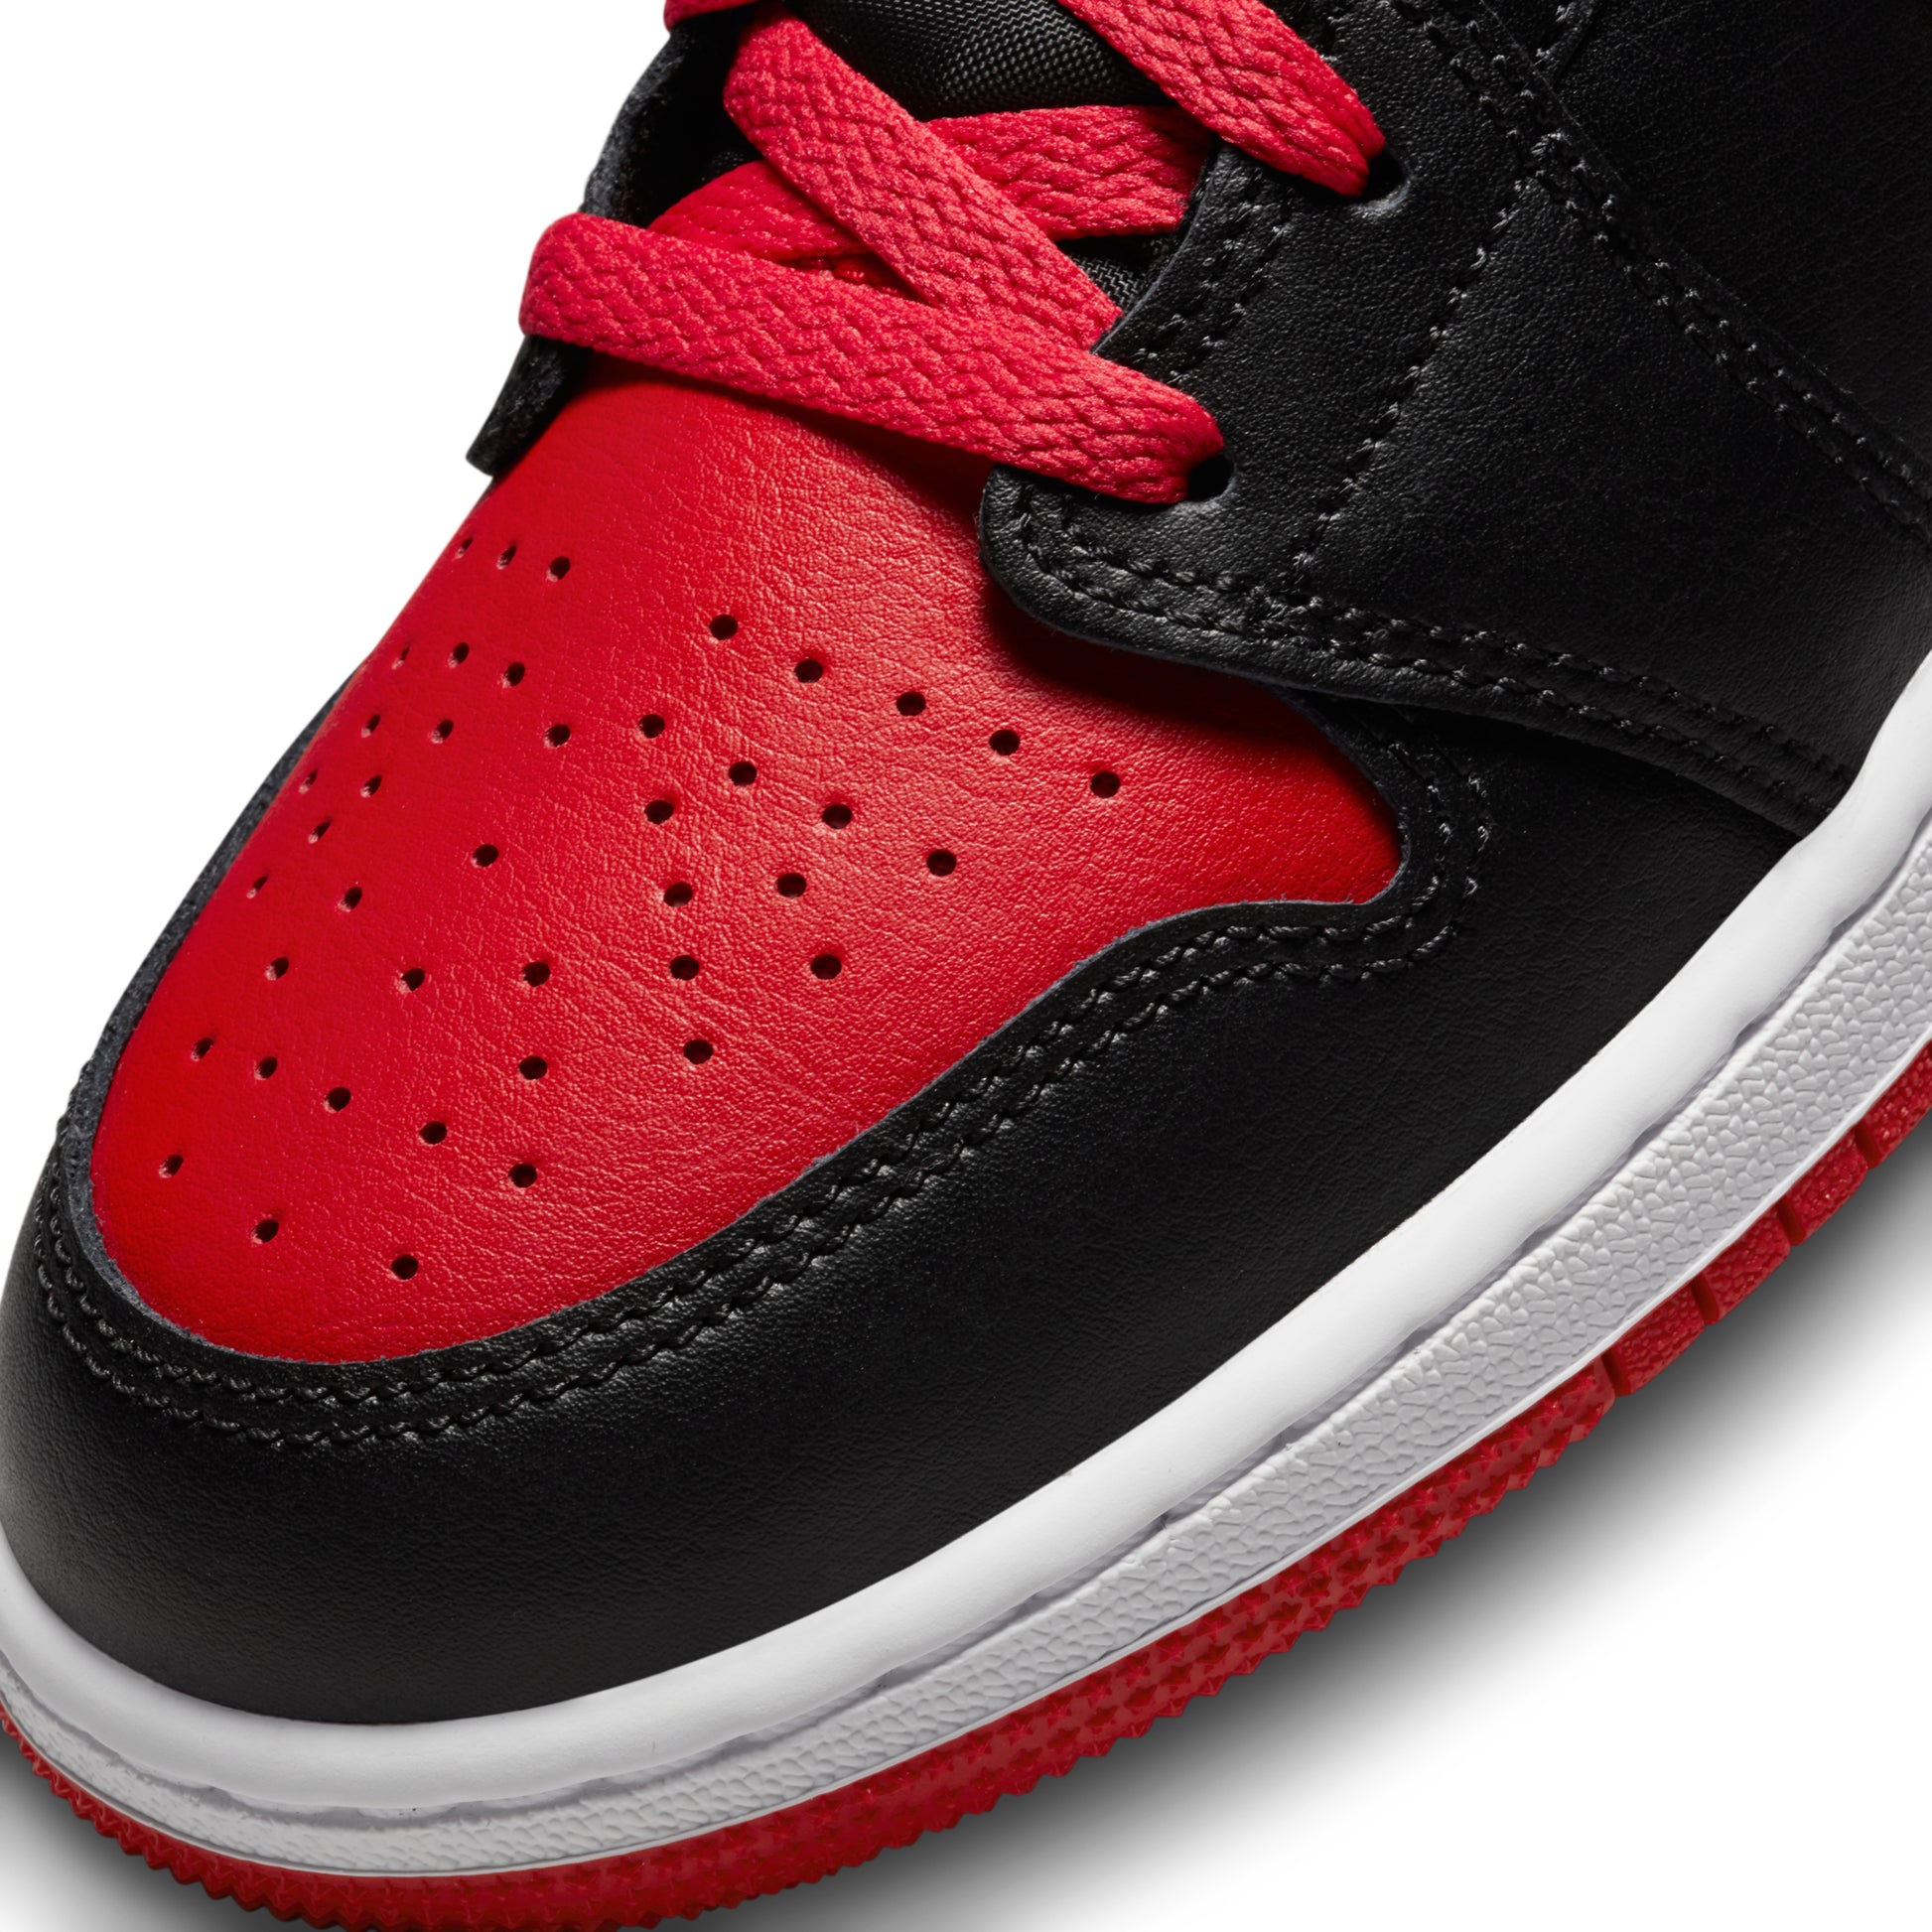 Nike Air Jordan 1 Mid Alternate Bred